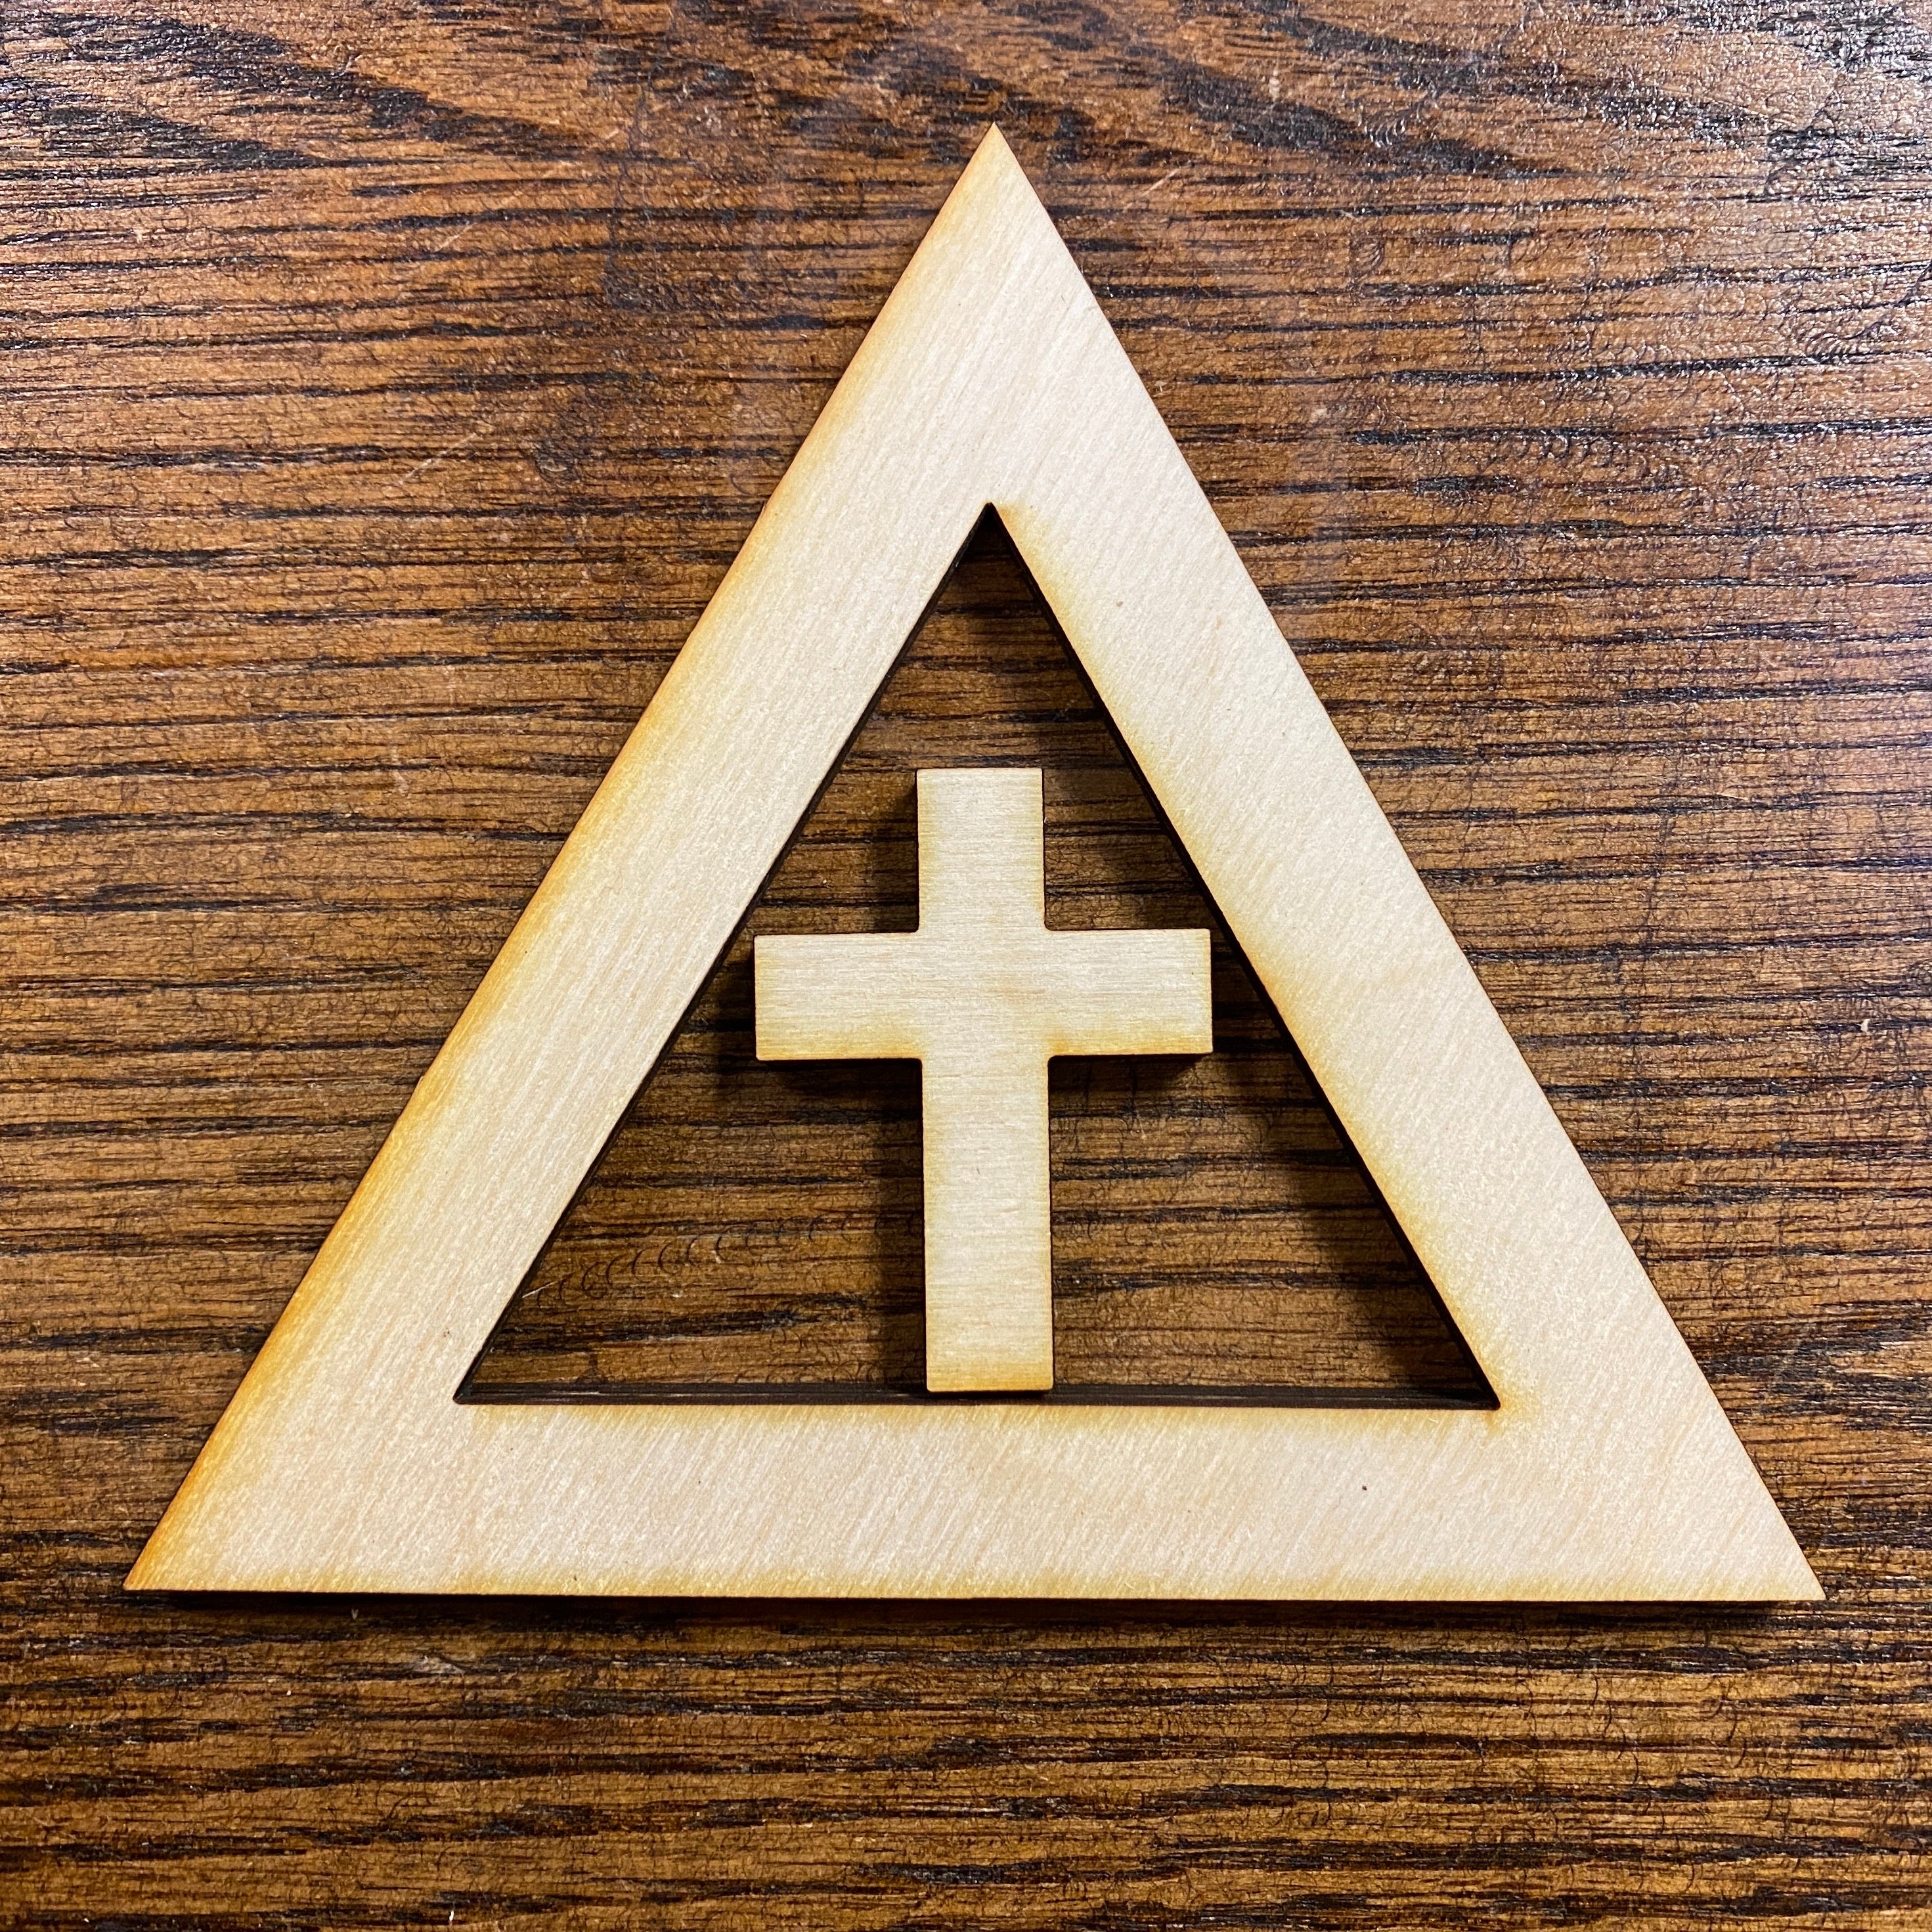 Cross and triangle set